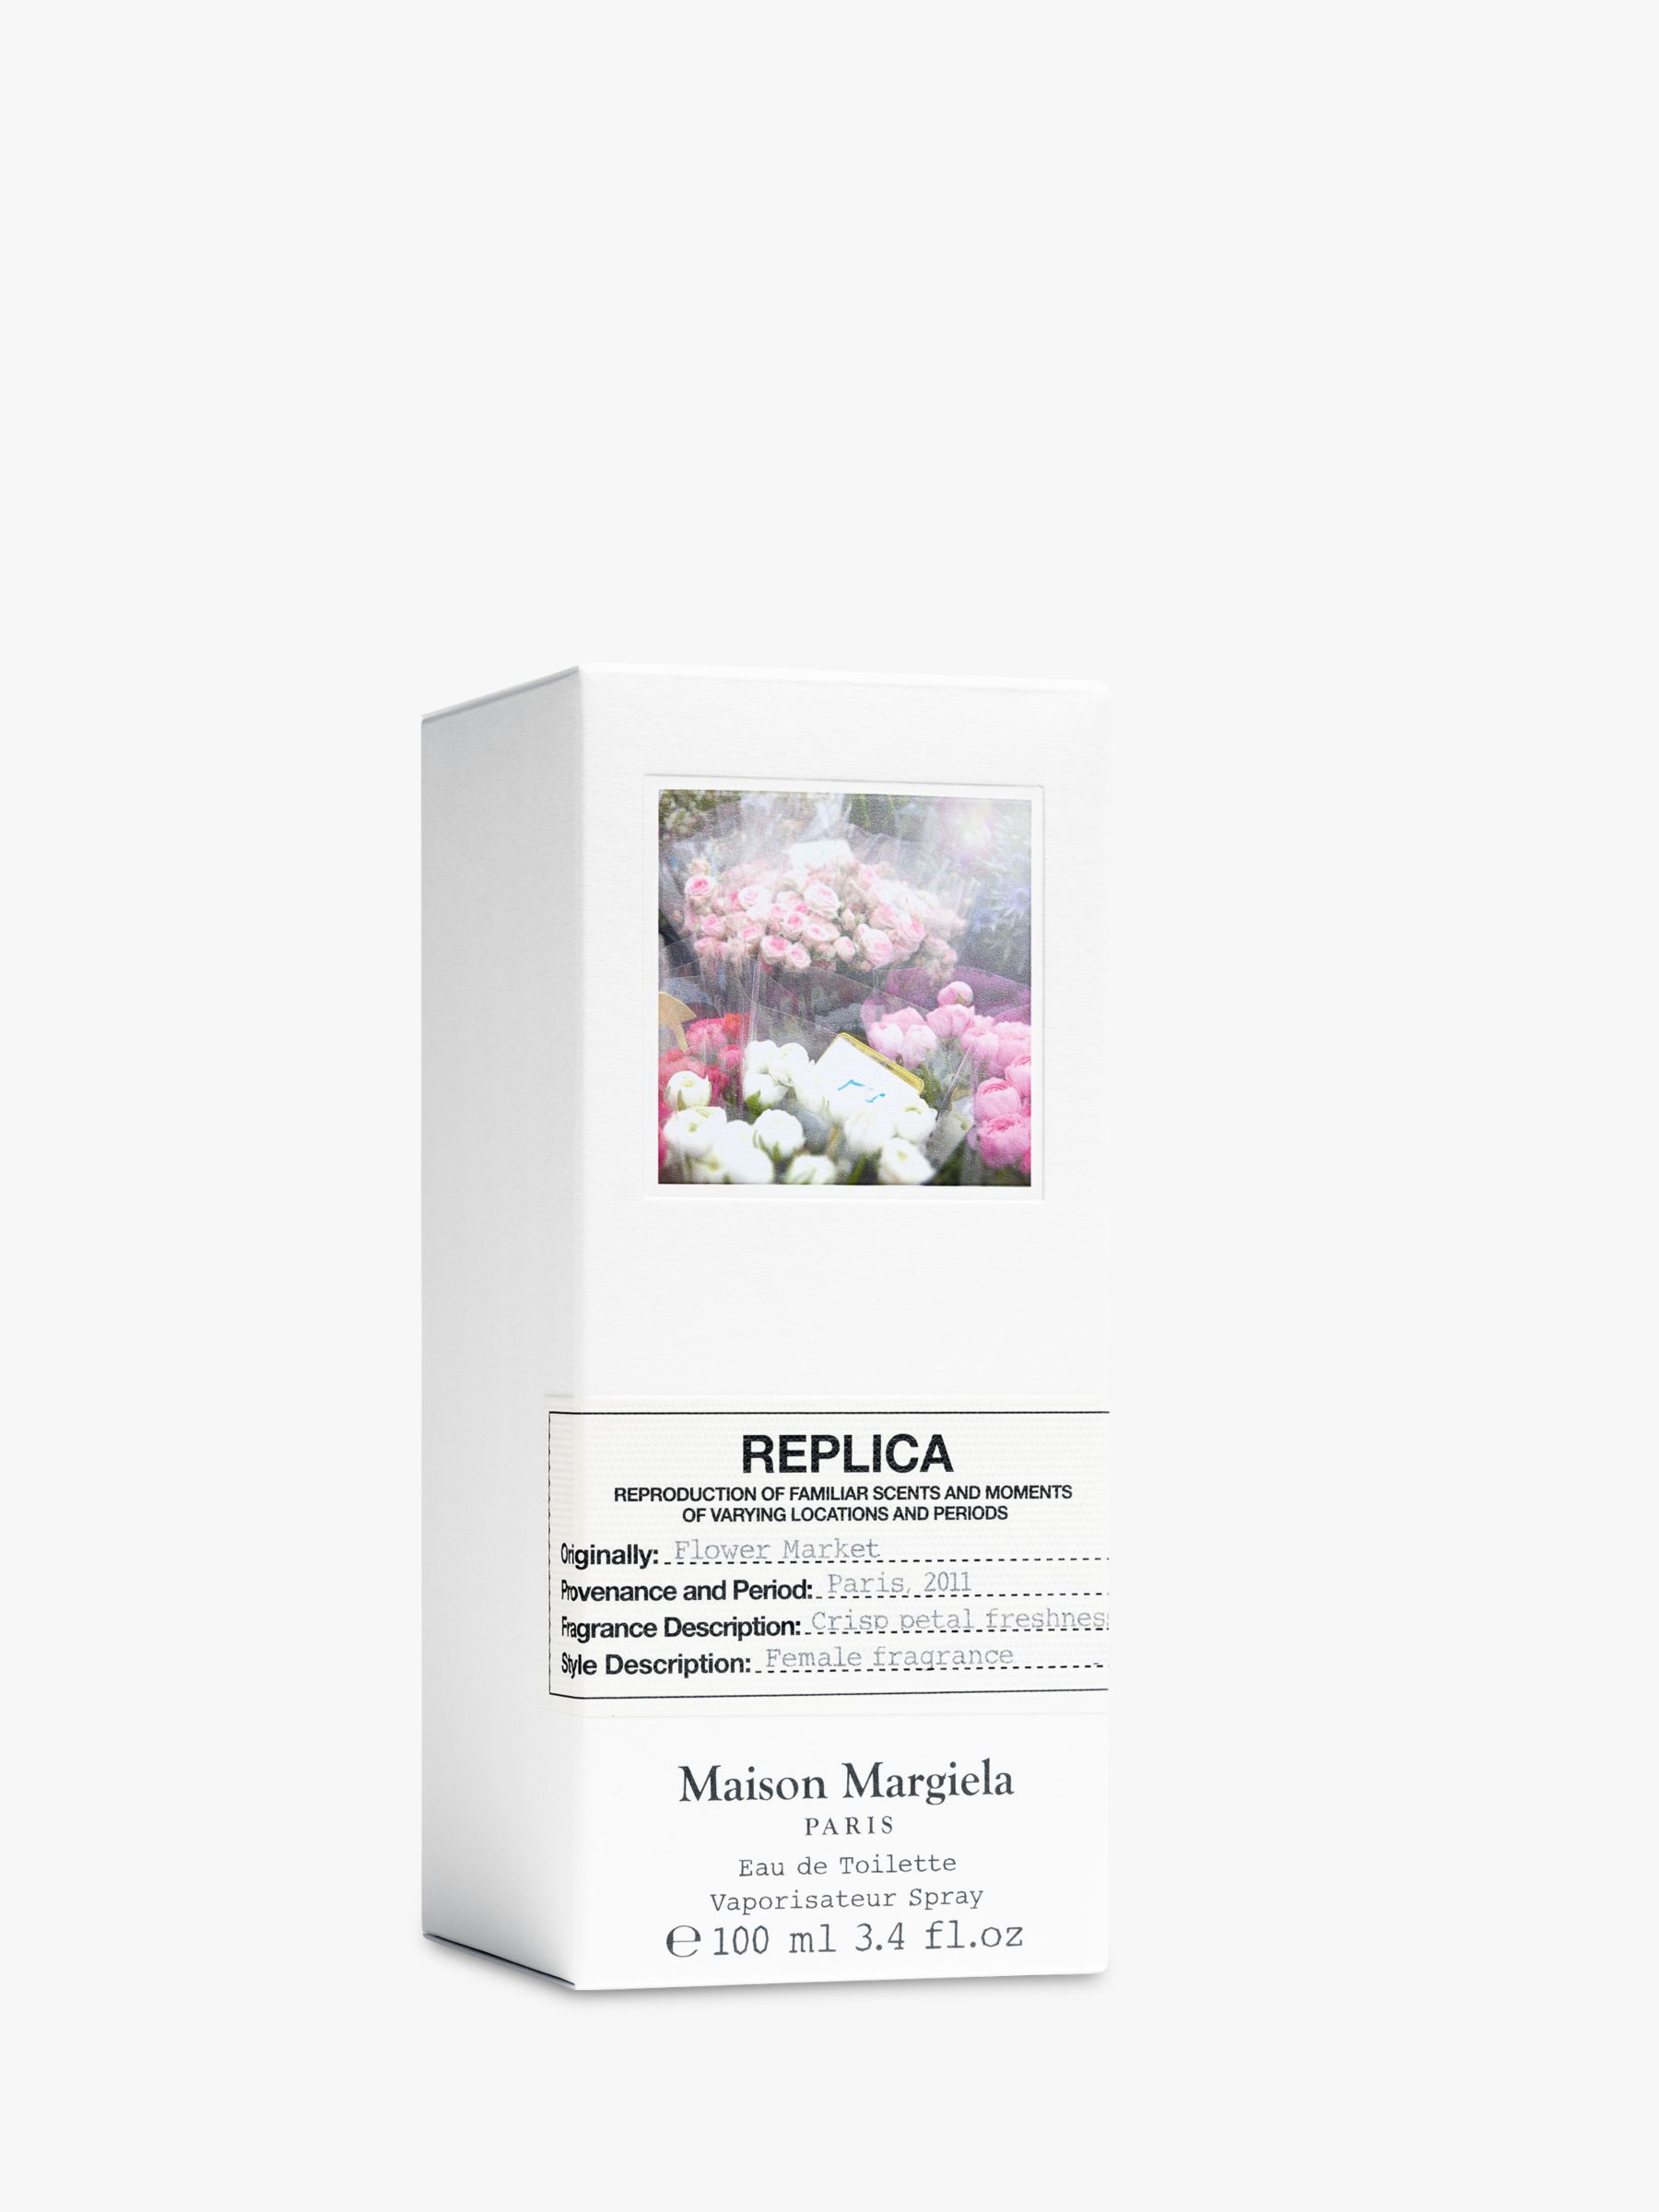 Maison Margiela Replica Flower Market Eau de Toilette, 100ml